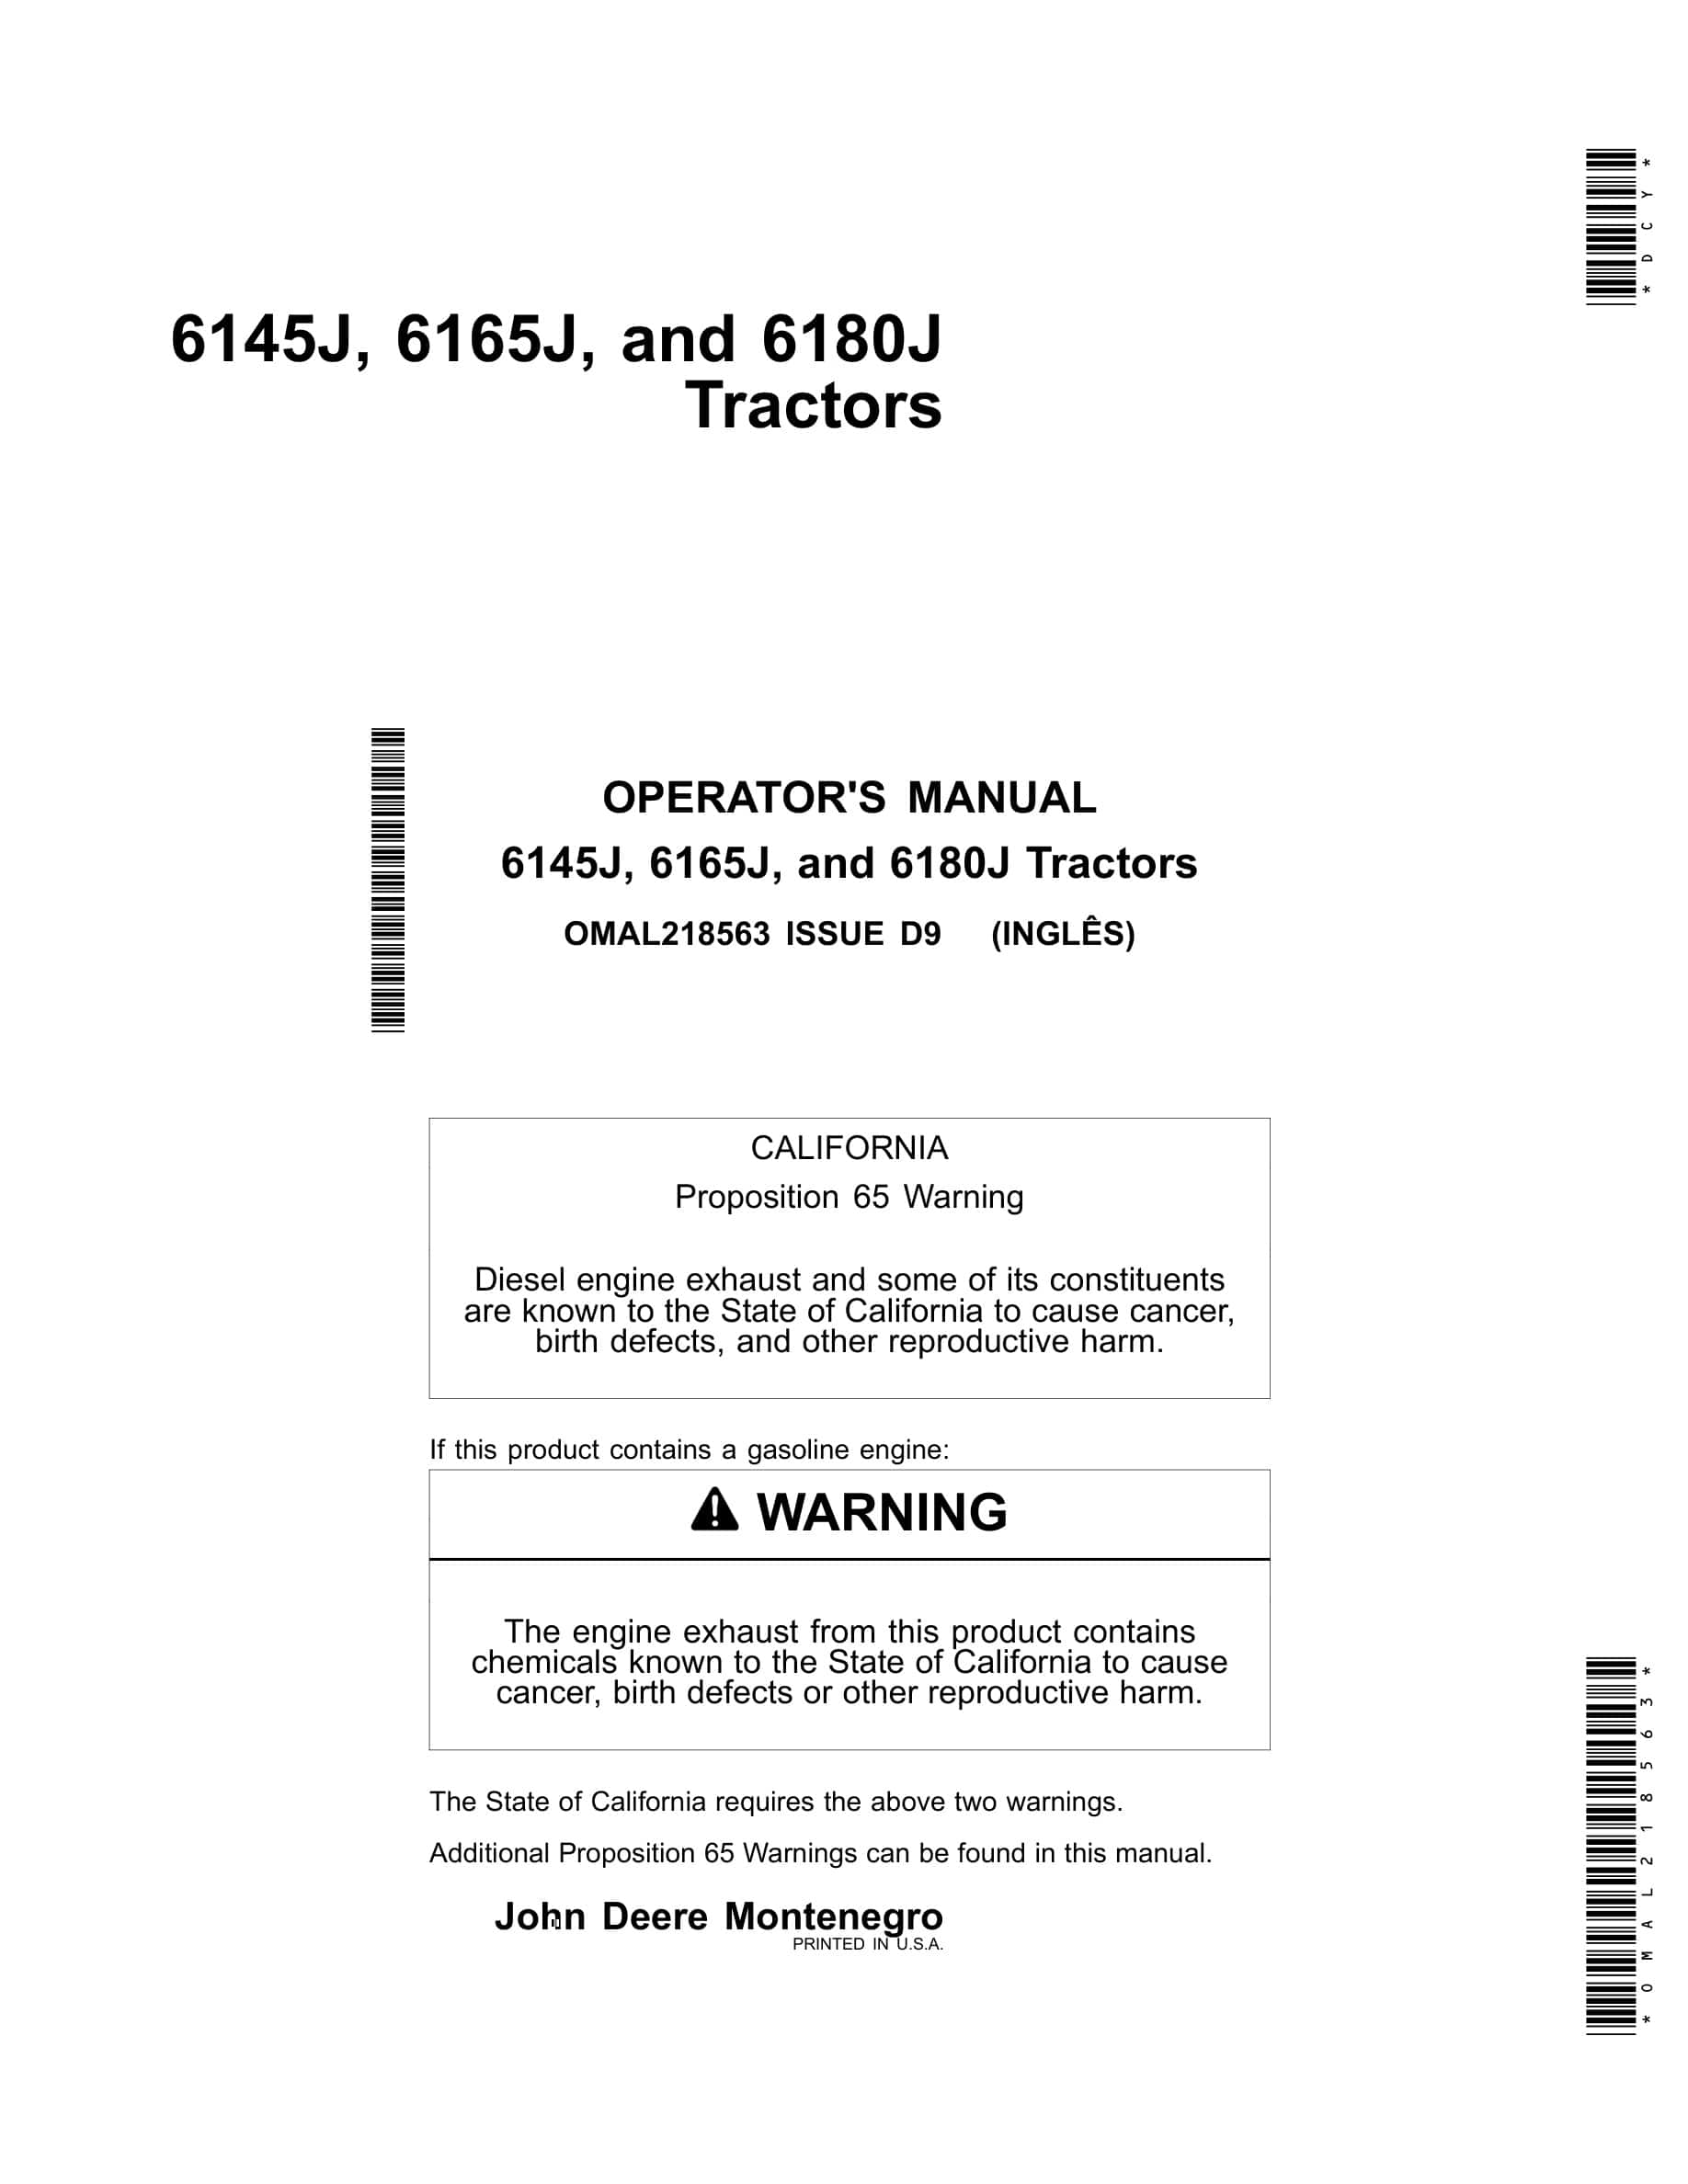 John Deere 6145j, 6165j, And 6180j Tractors Operator Manuals OMAL218563-1